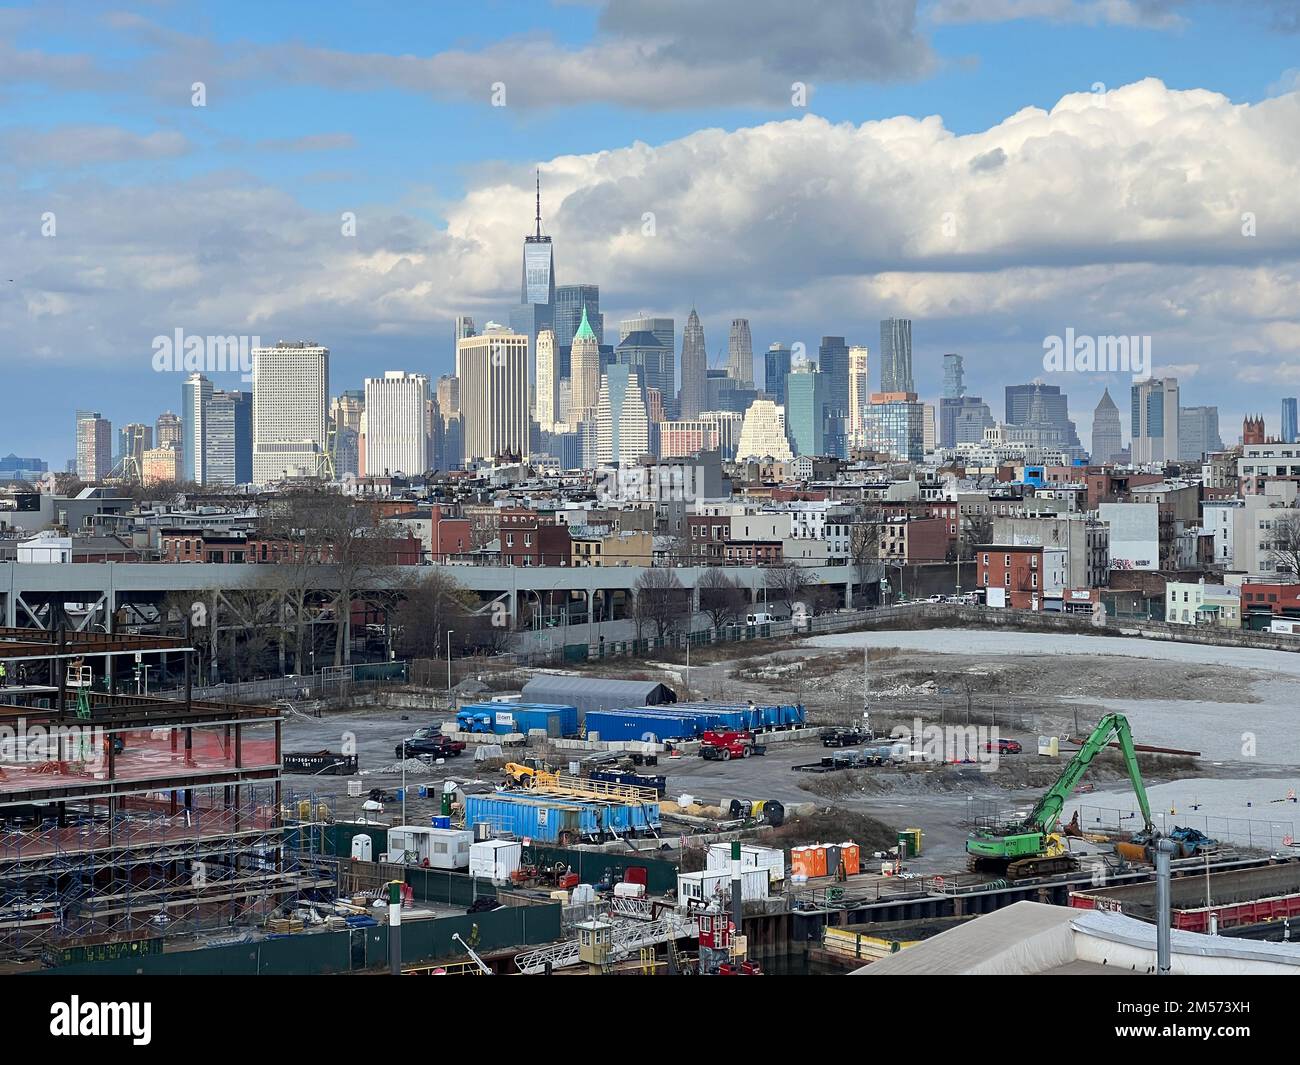 Lower Manhattan skyline shooting up behind Brooklyn neighborhoods in the foreground. Stock Photo